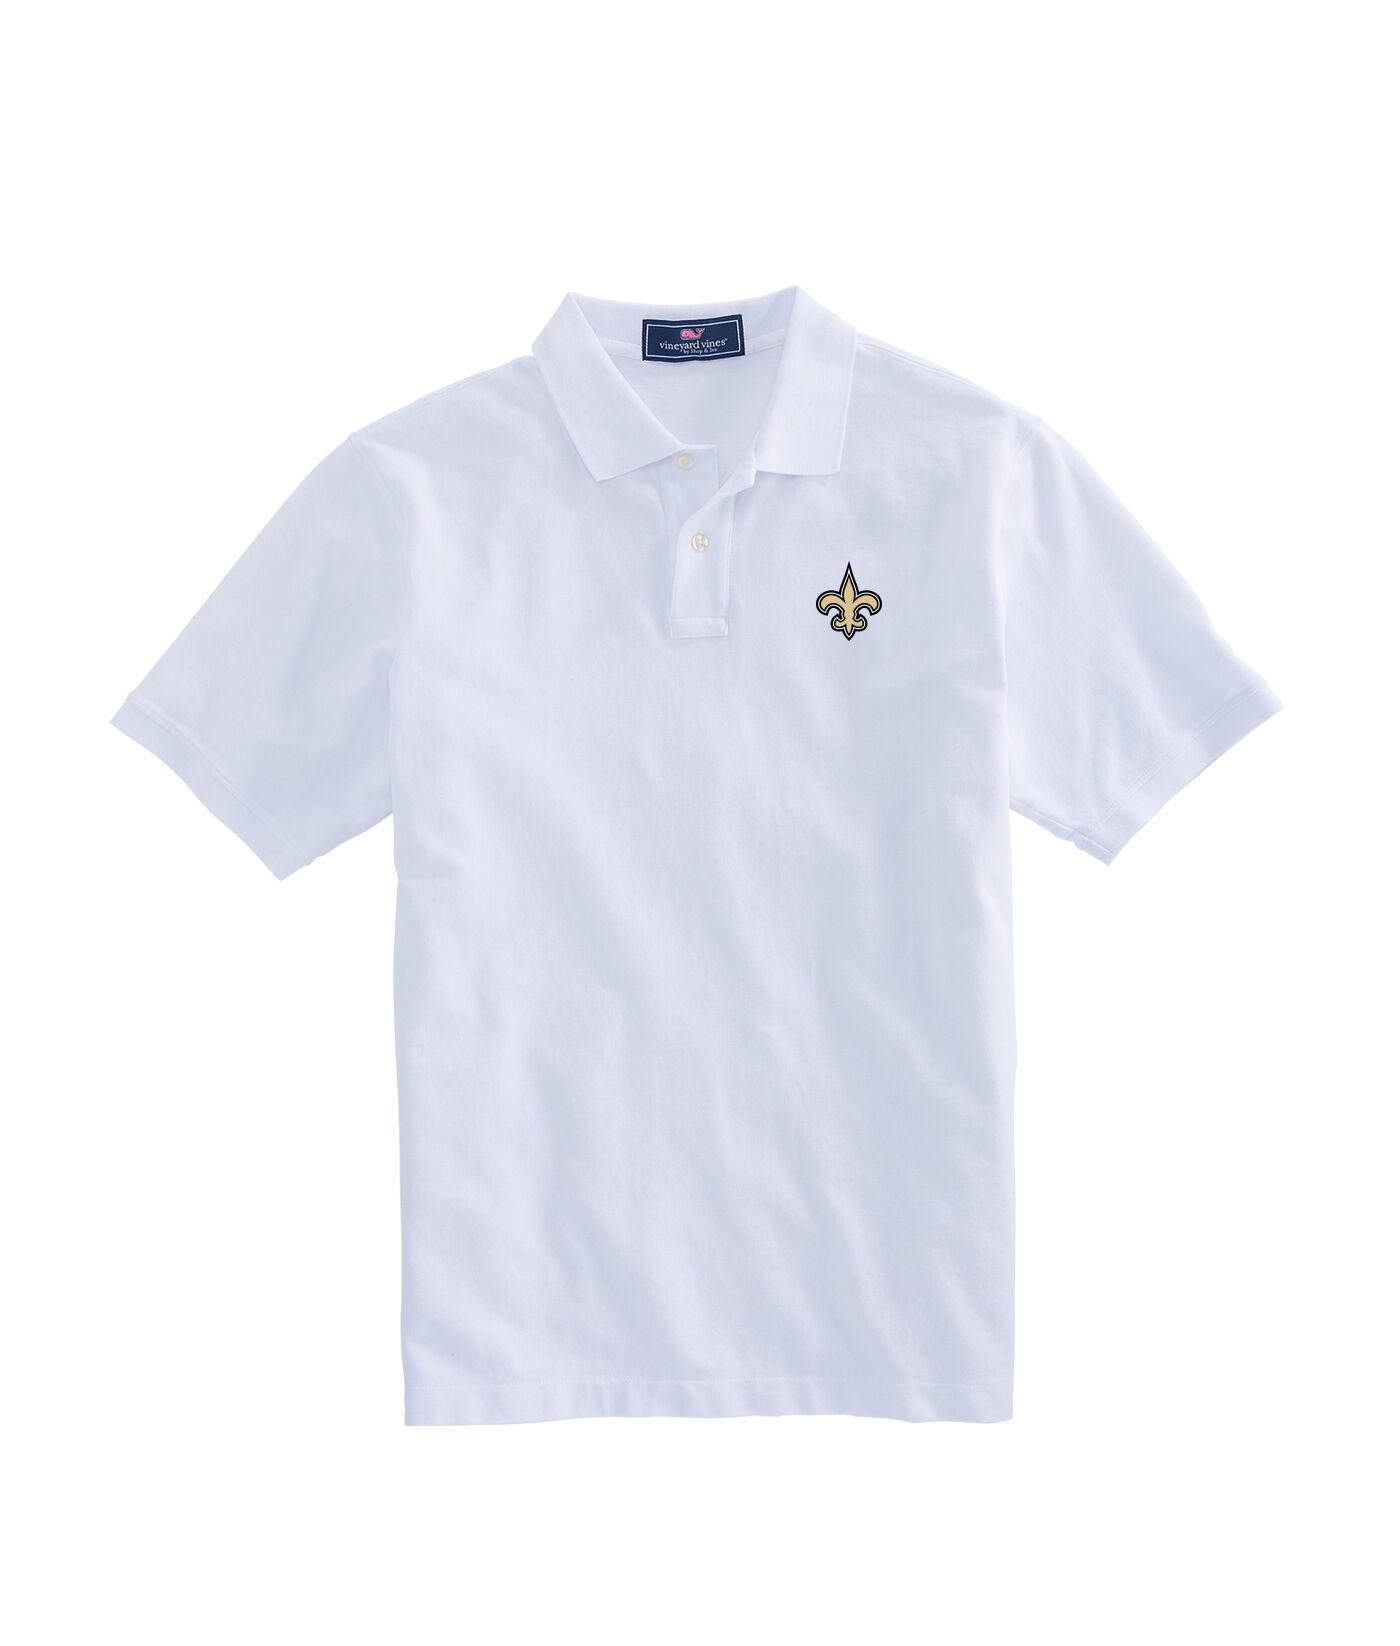 new orleans saints polo shirt